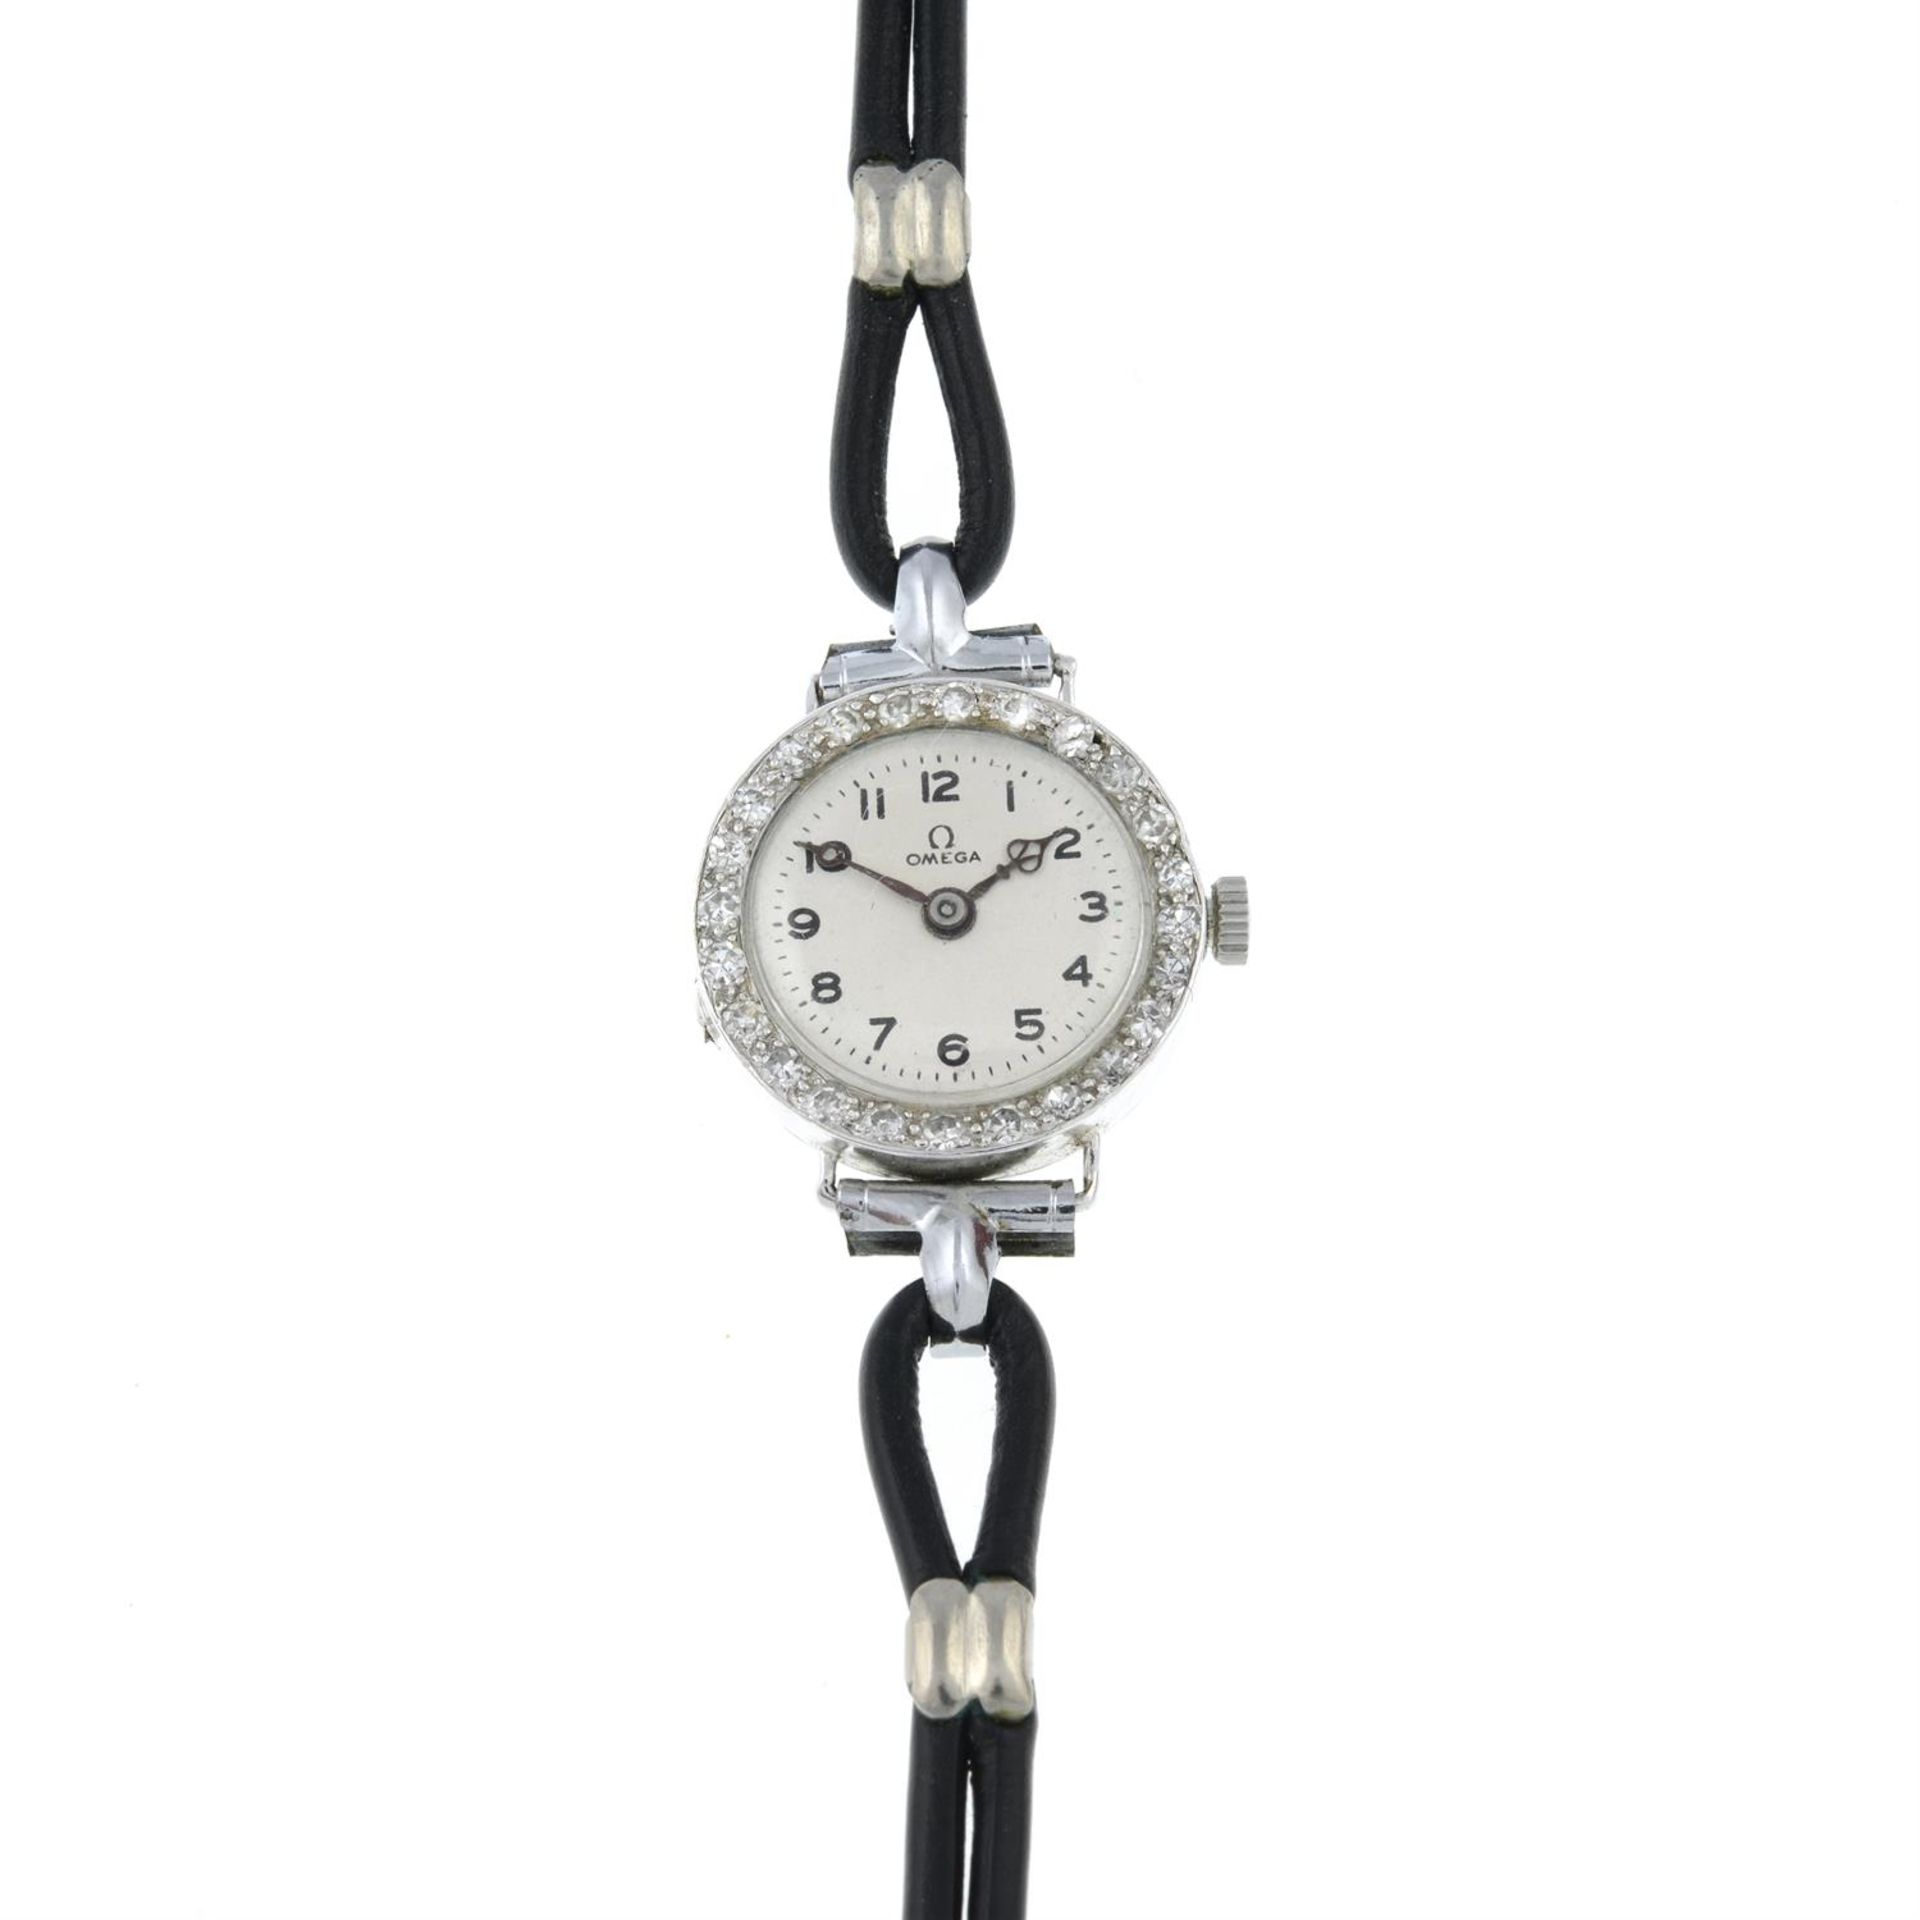 A lady's mid 20th century single-cut diamond bezel wrist watch, with black leather strap.